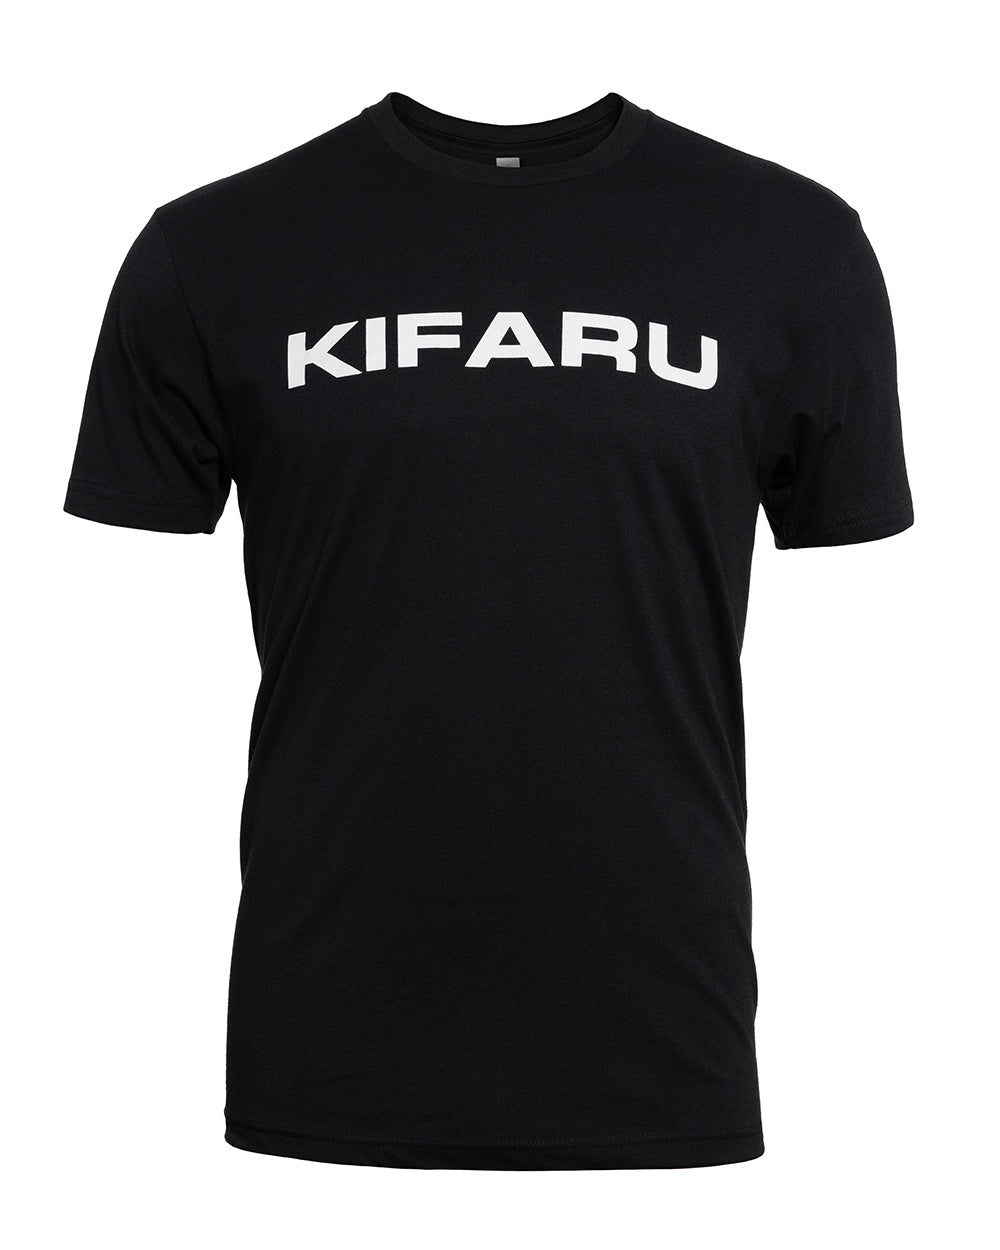 Kifaru Bear Skull Shirt